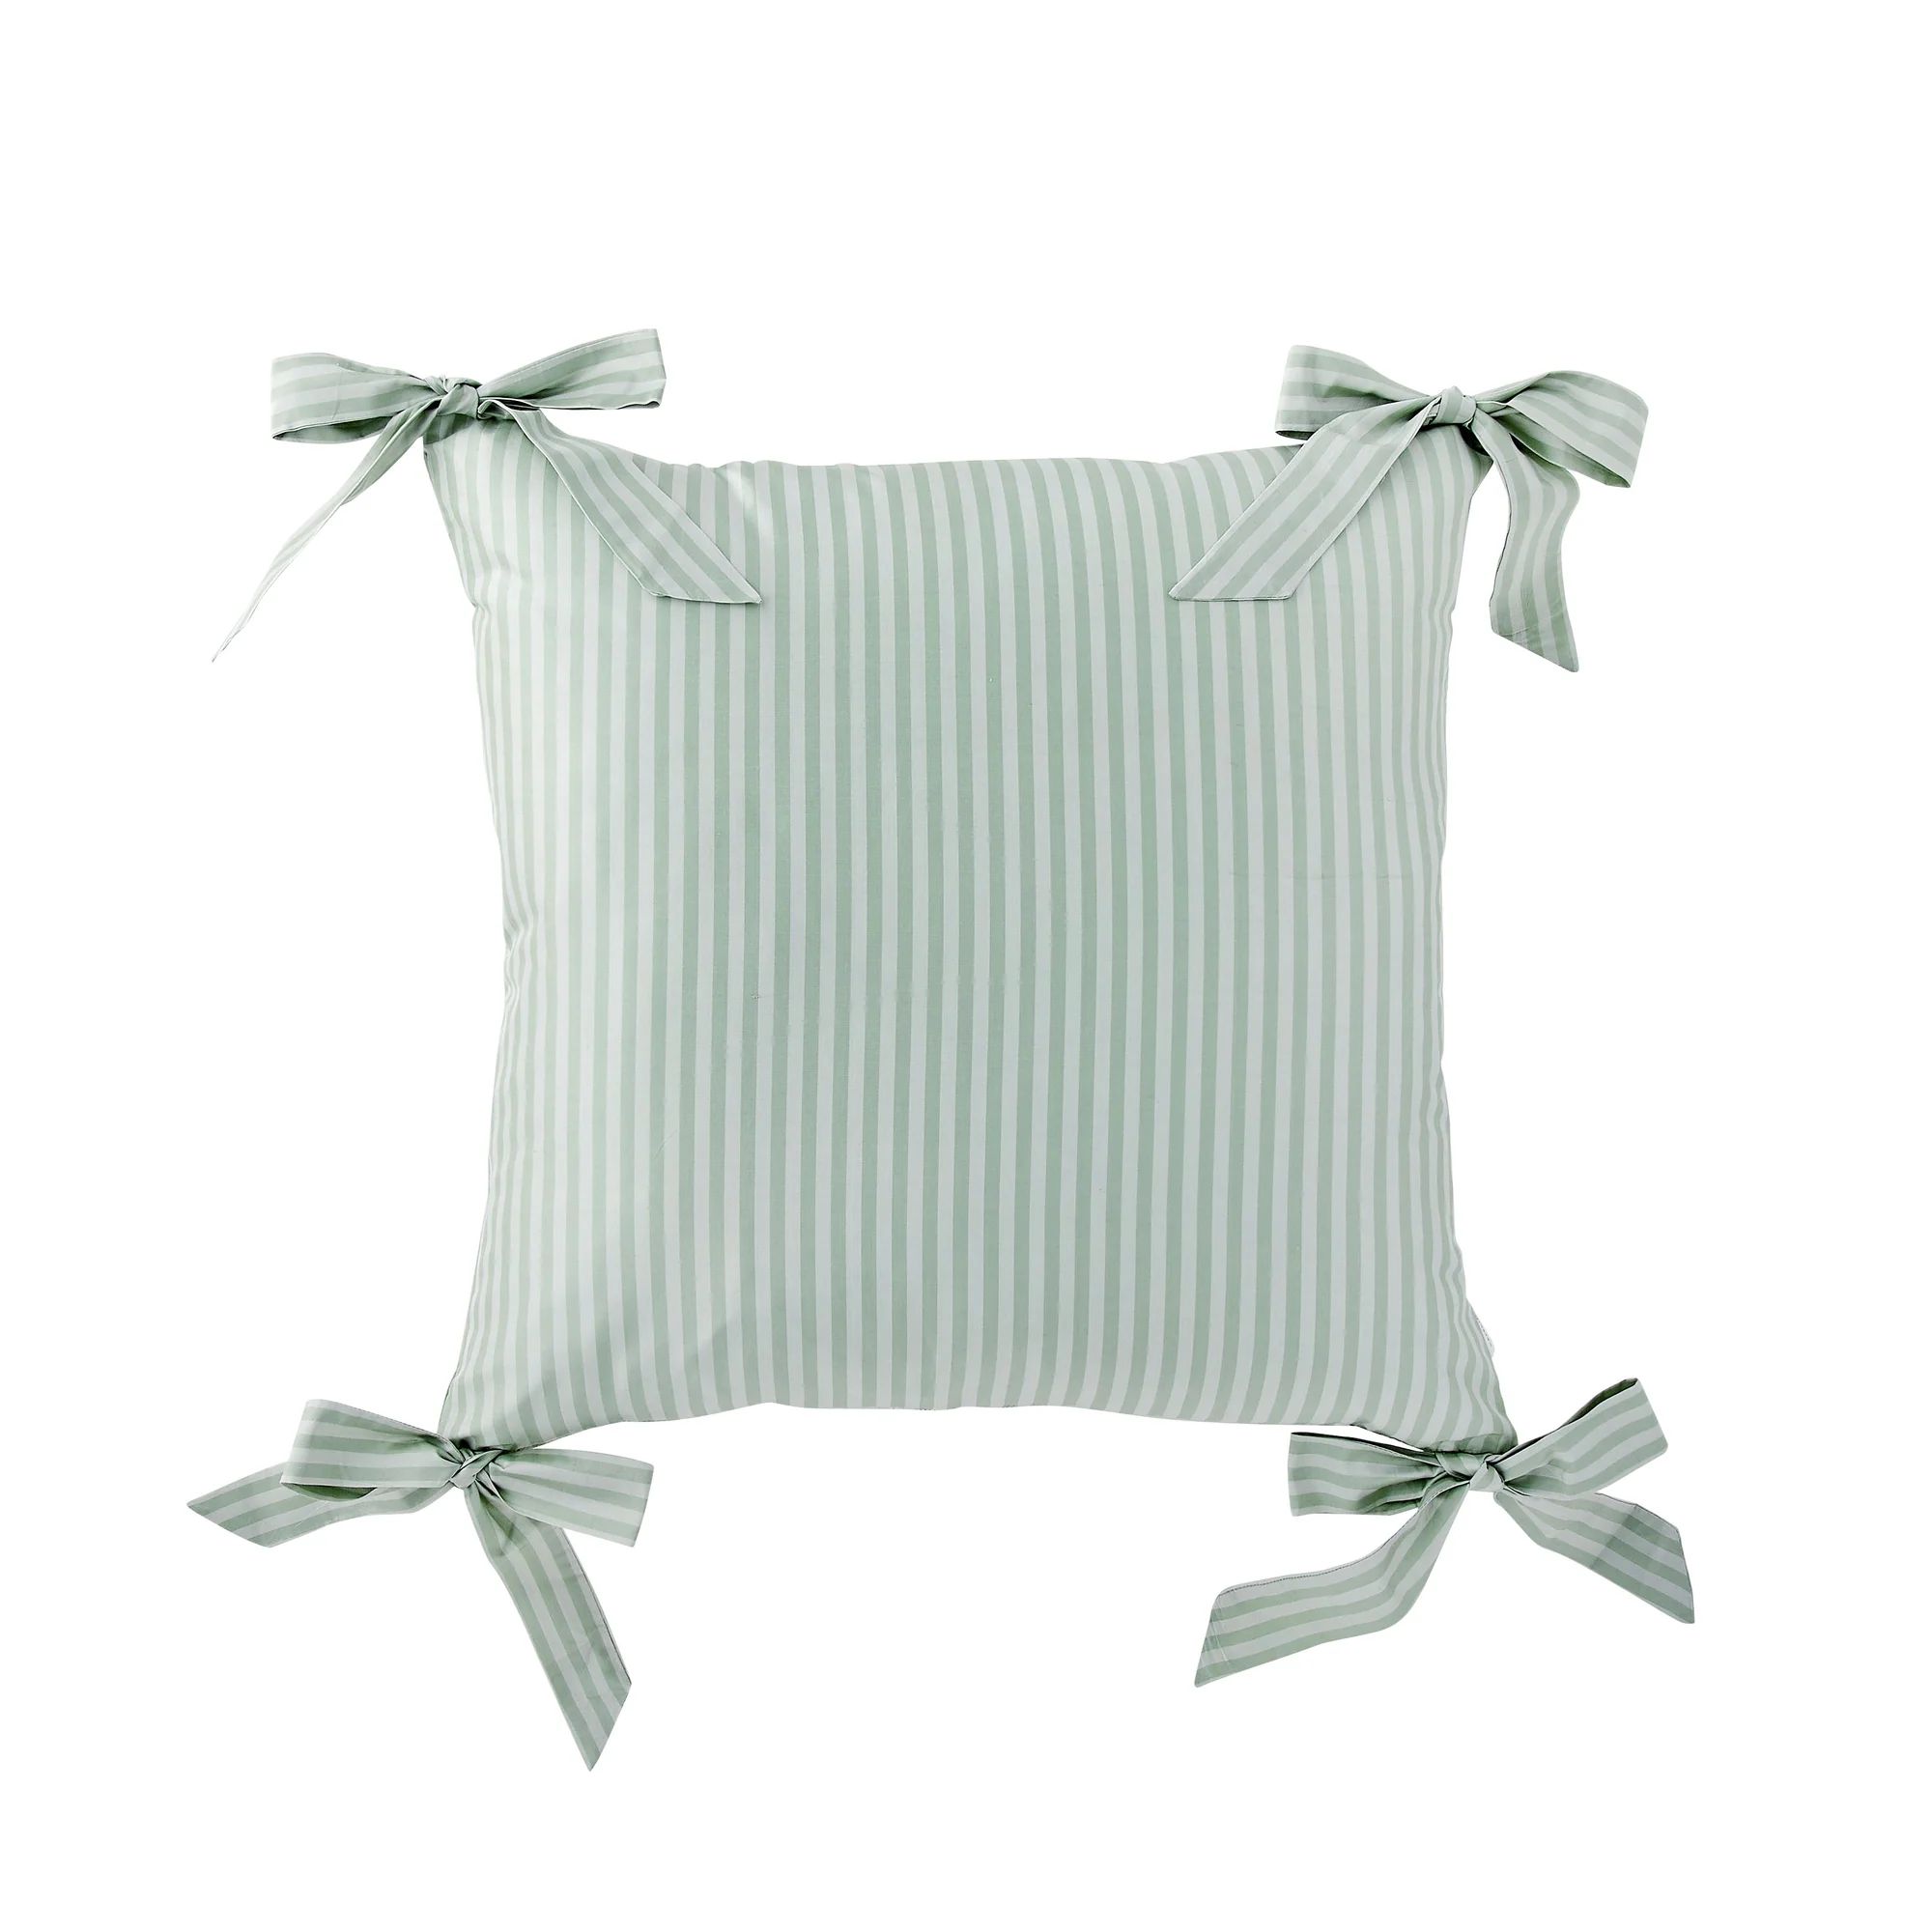 Noelle Bow Pillow in Wintergreen | Caitlin Wilson Design